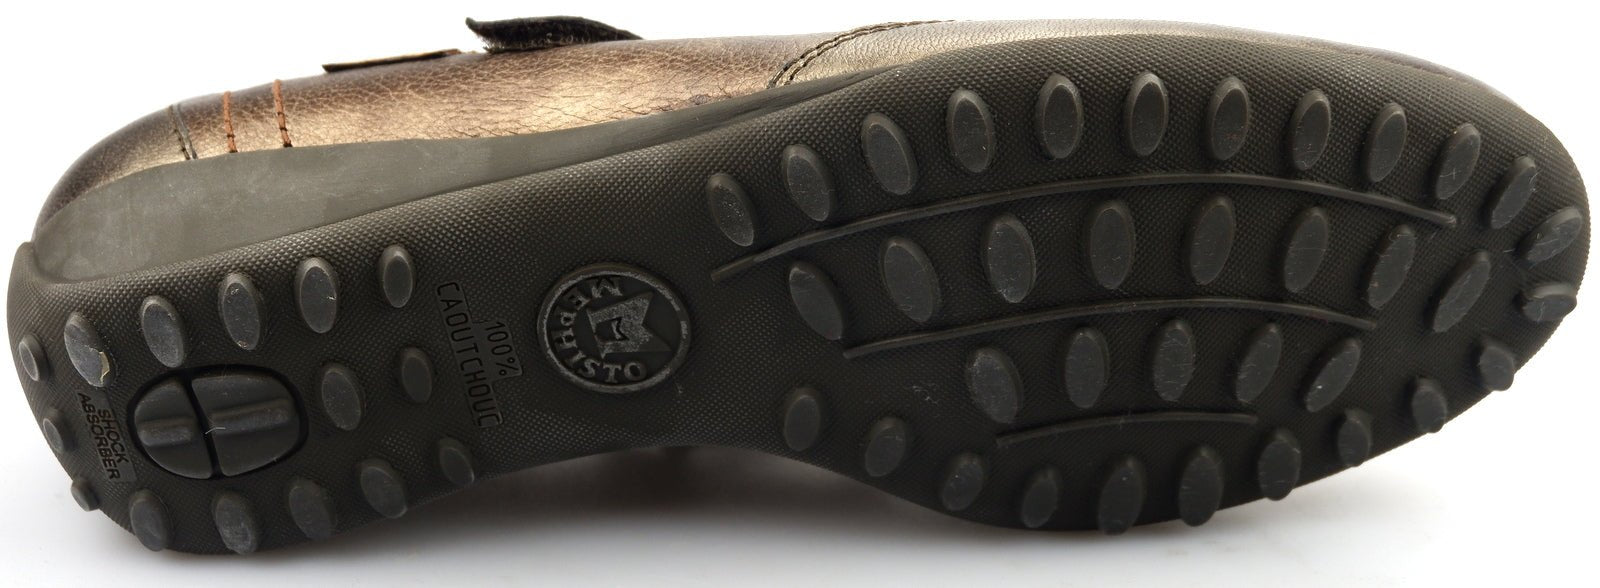 Mephisto LEIDINA bronze leather shoe for women with velcro closure - ChaplinshoesMephisto LEIDINA bronze leather shoe for women with velcro closureMephisto